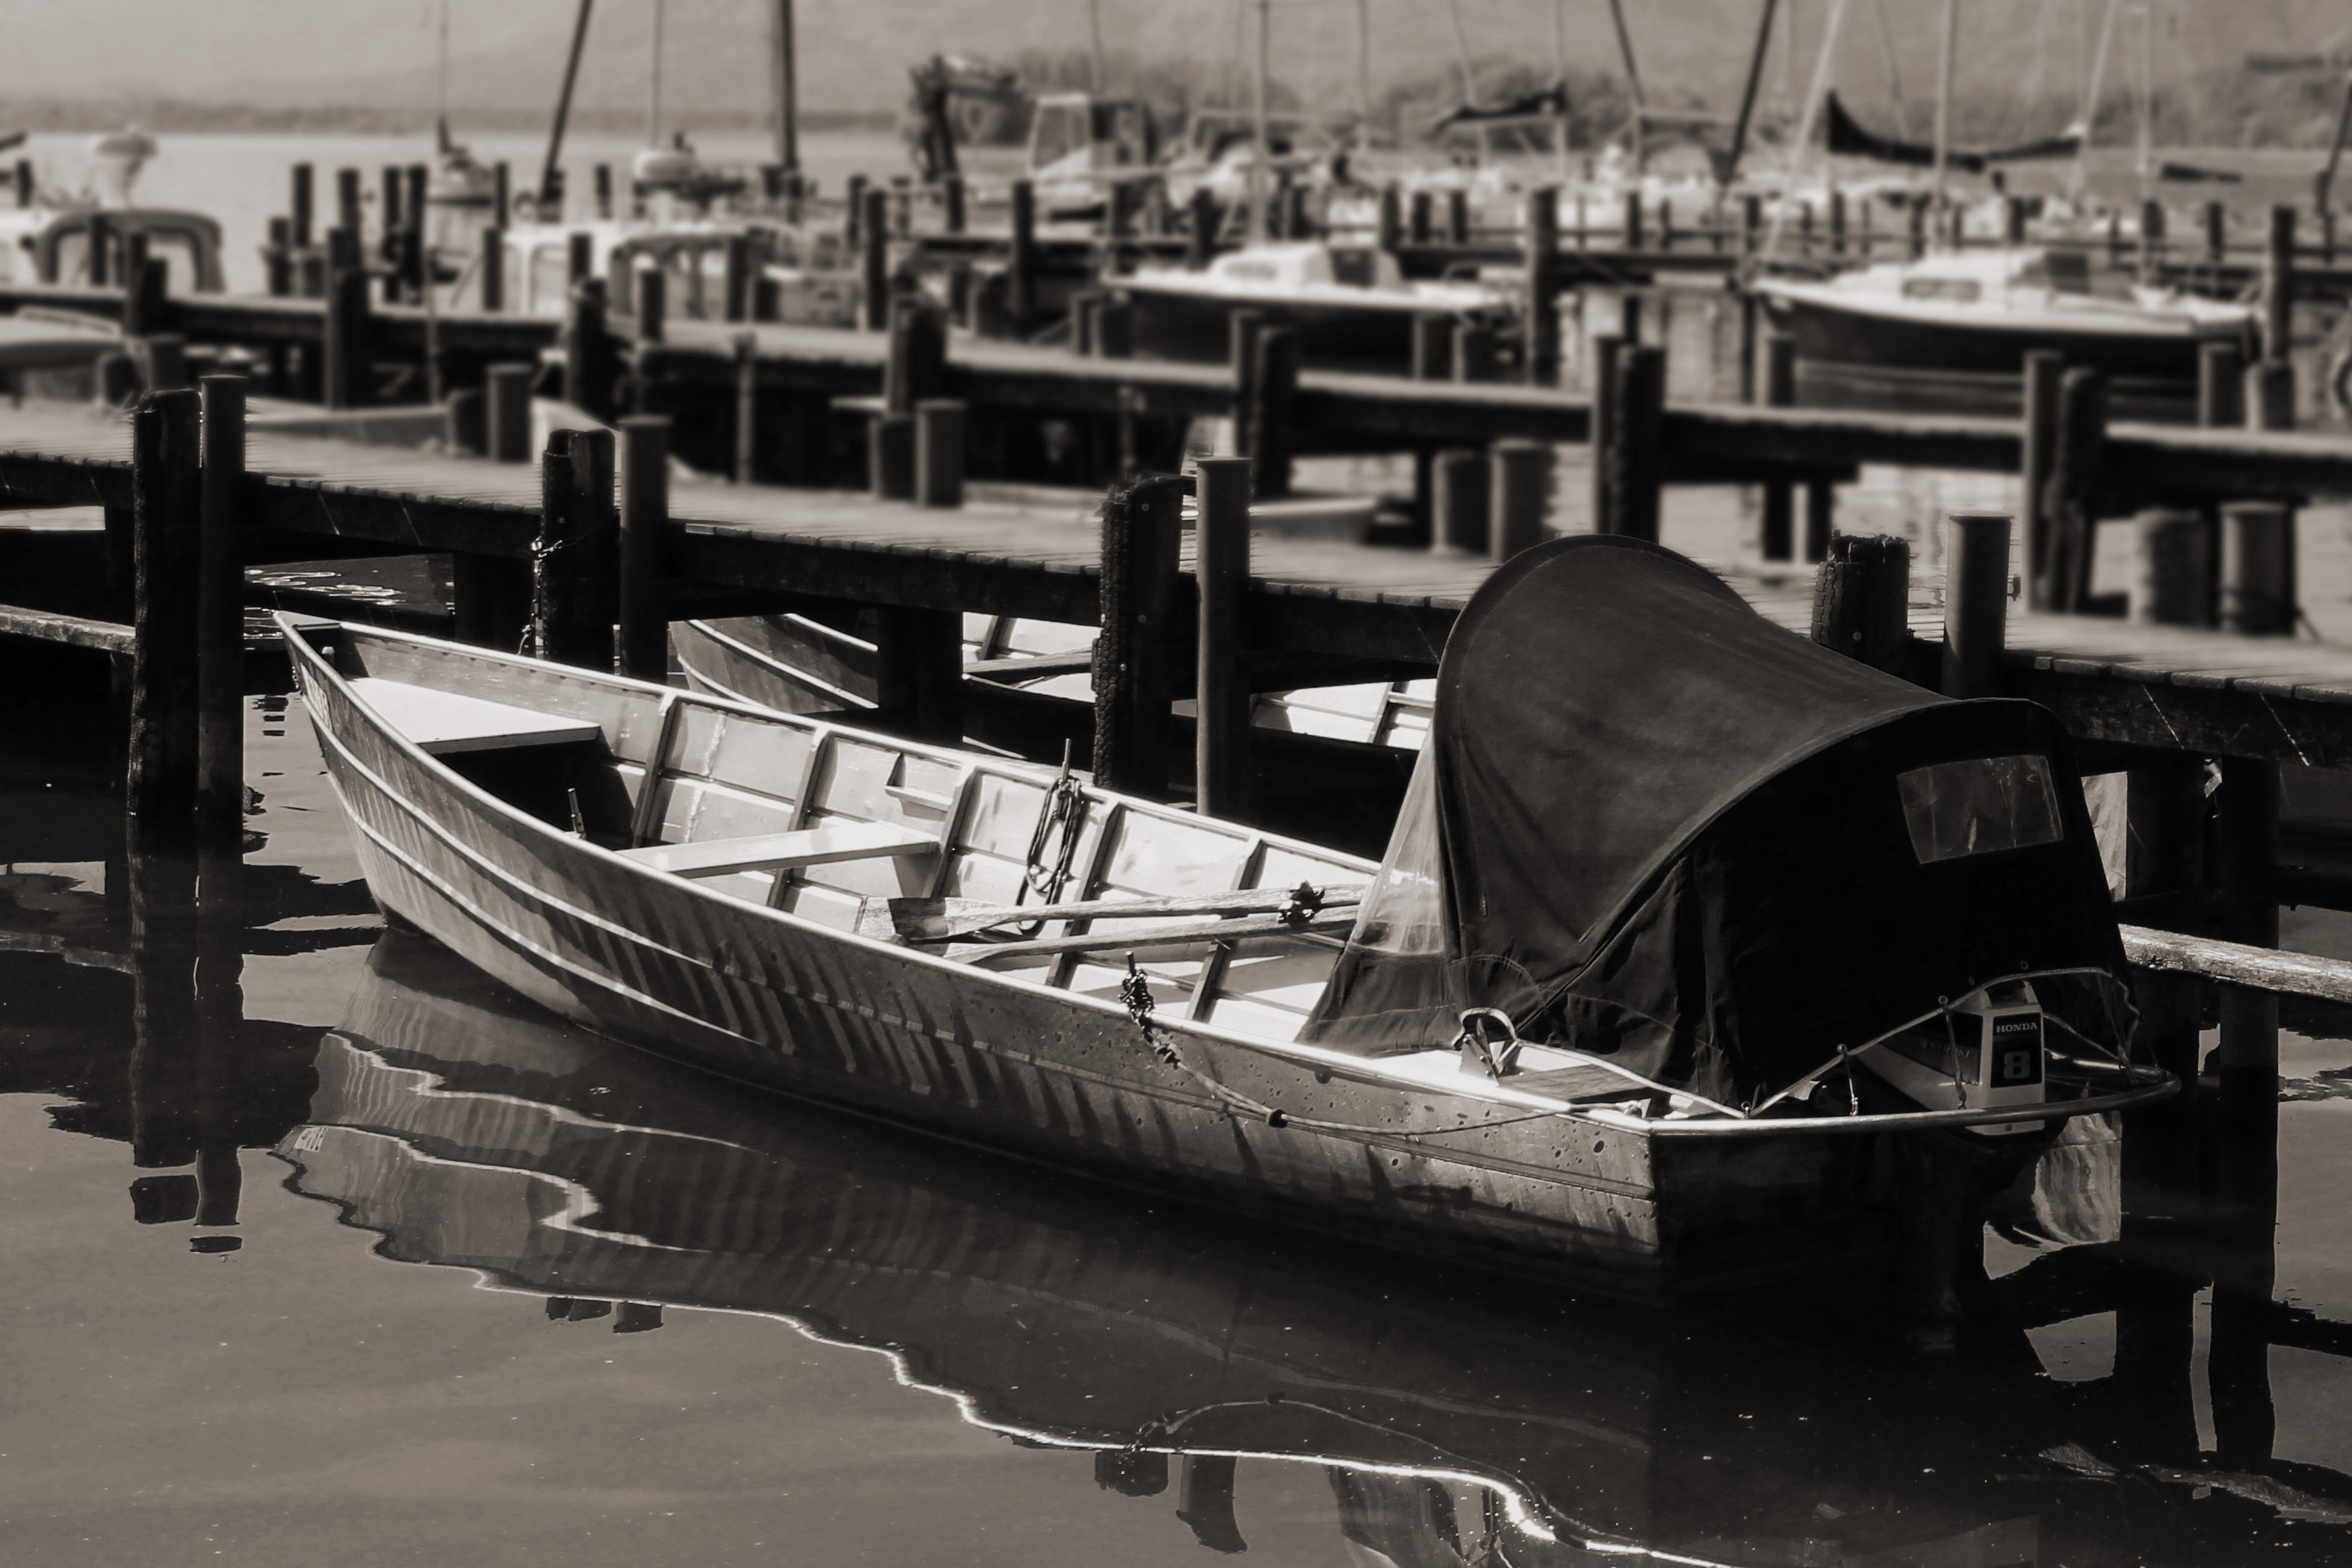 greyscale photo of boat docked at daytime